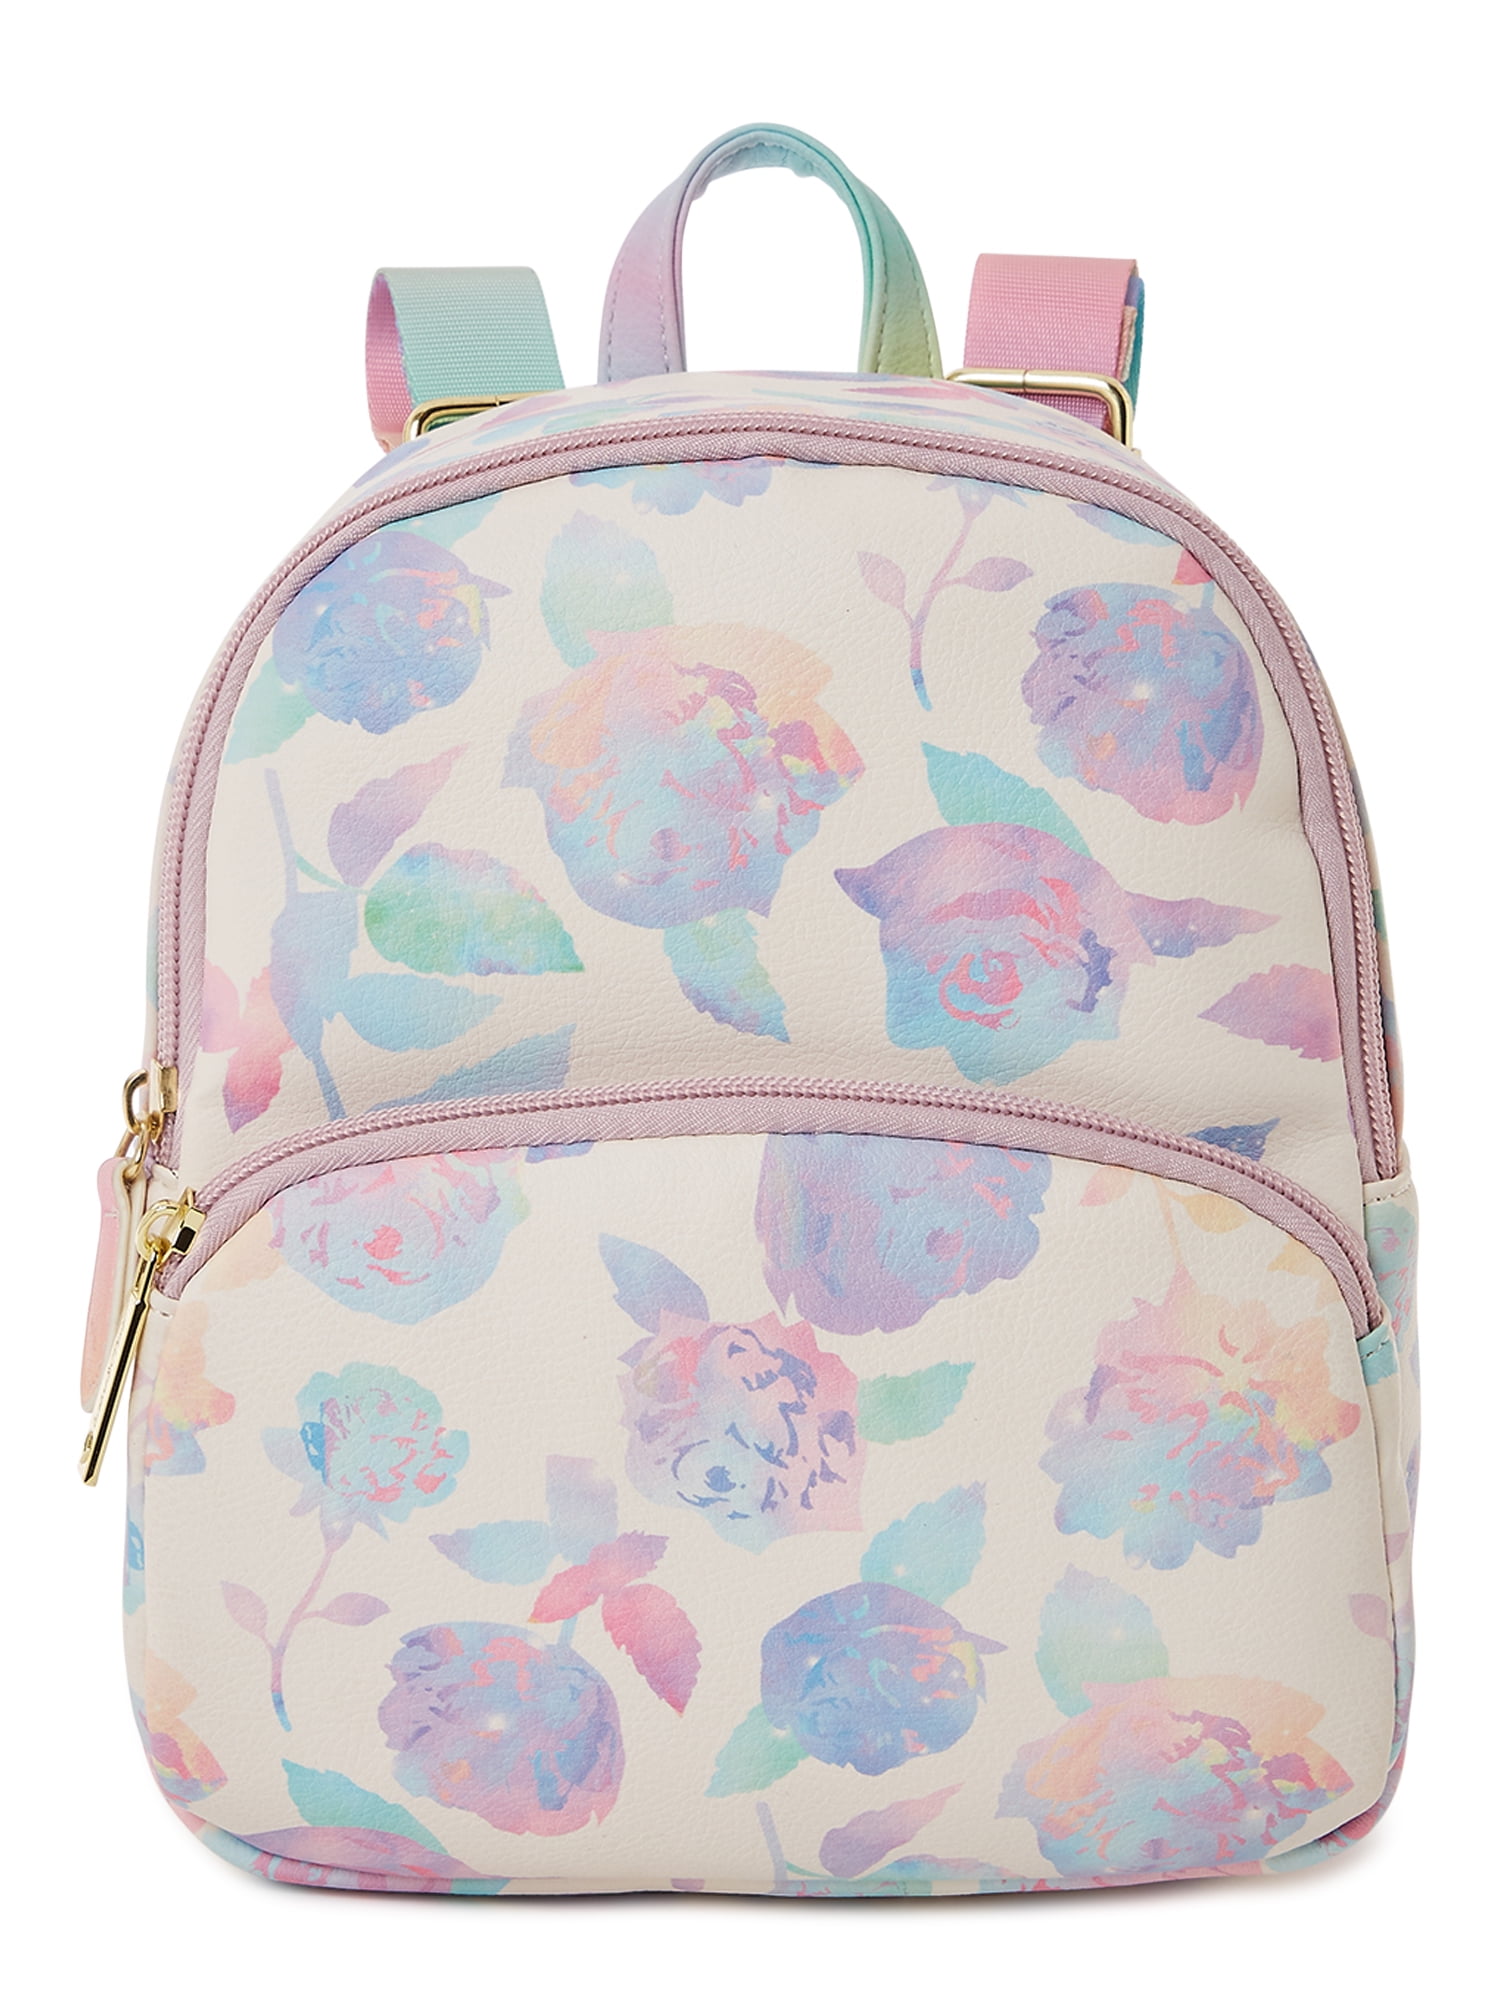 Betsy Johnson mini backpack | Betsey johnson mini backpack, Betsey johnson  backpack, Velvet backpack